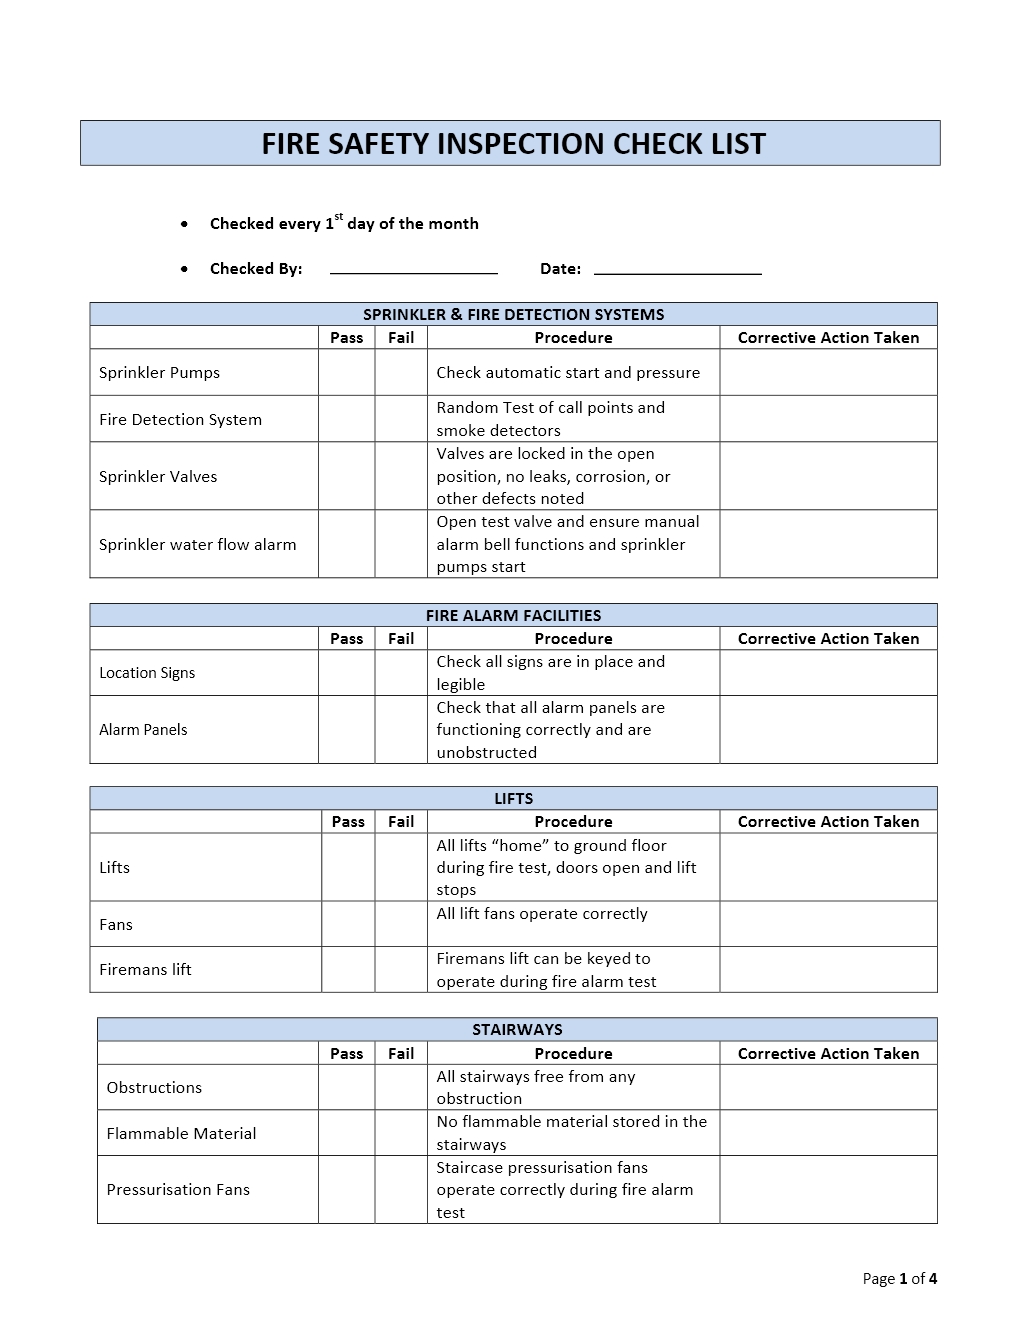 Sample Of Safety Inspection Checklist | K3lh.com: HSE ...